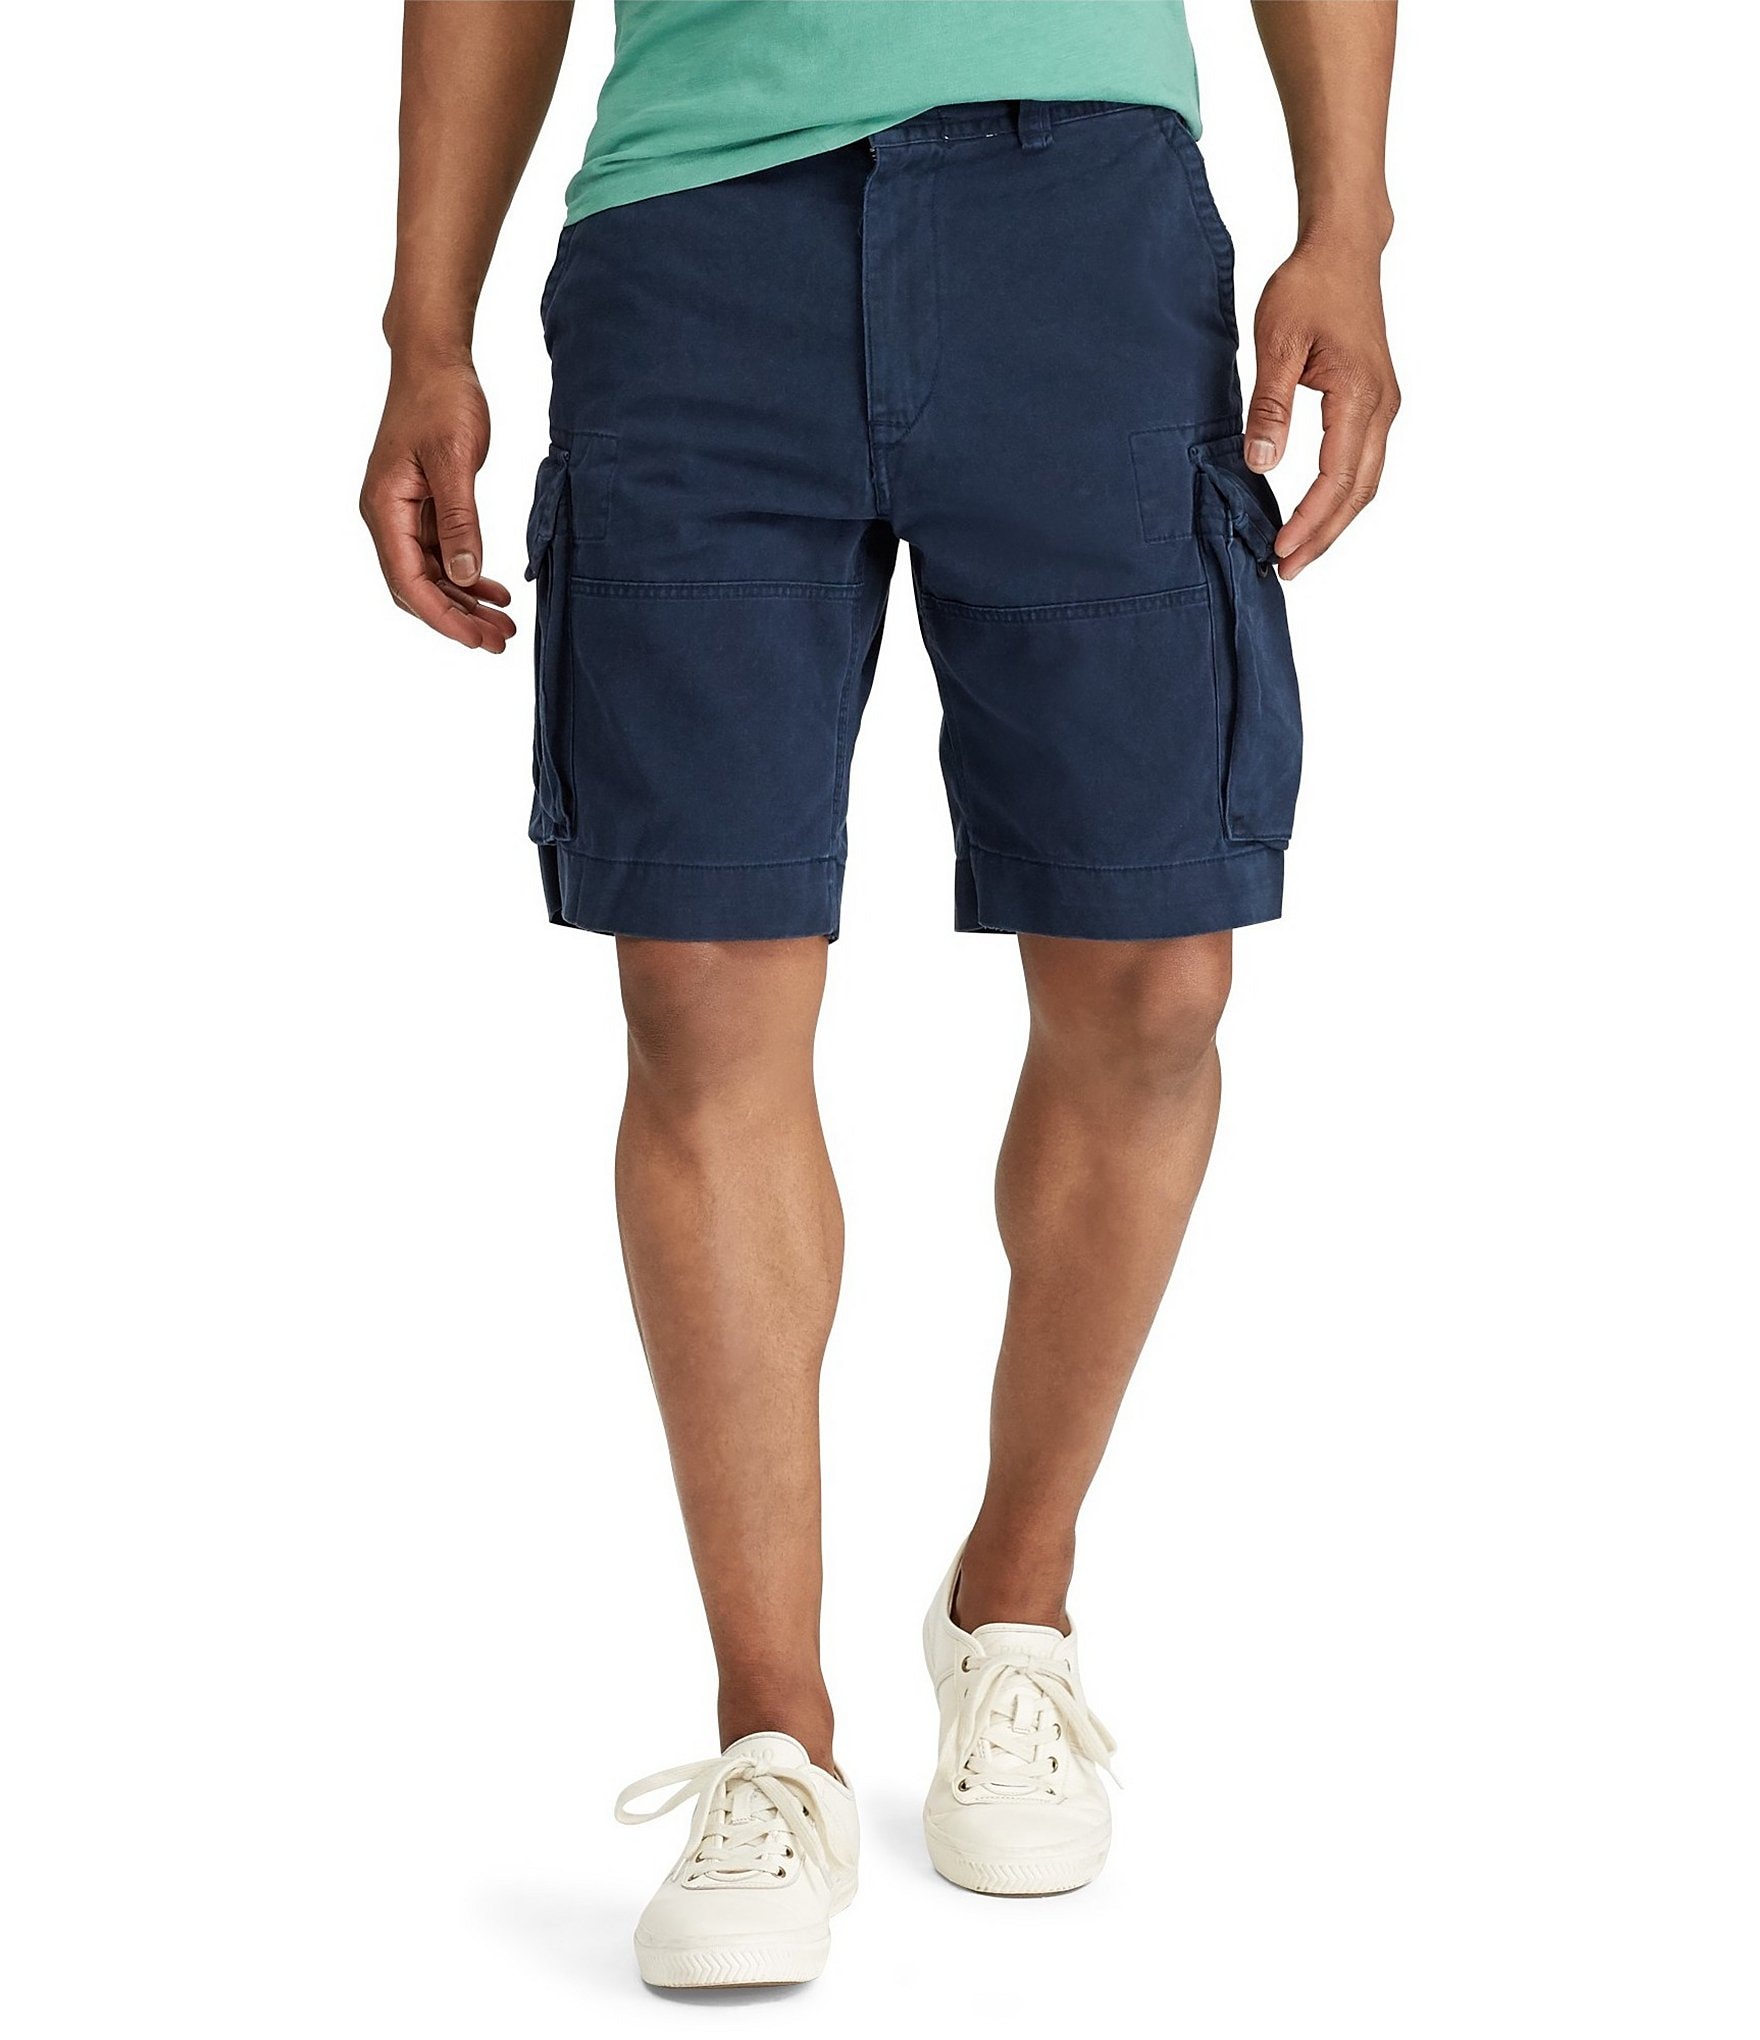 bluey: Men's Shorts | Dillard's